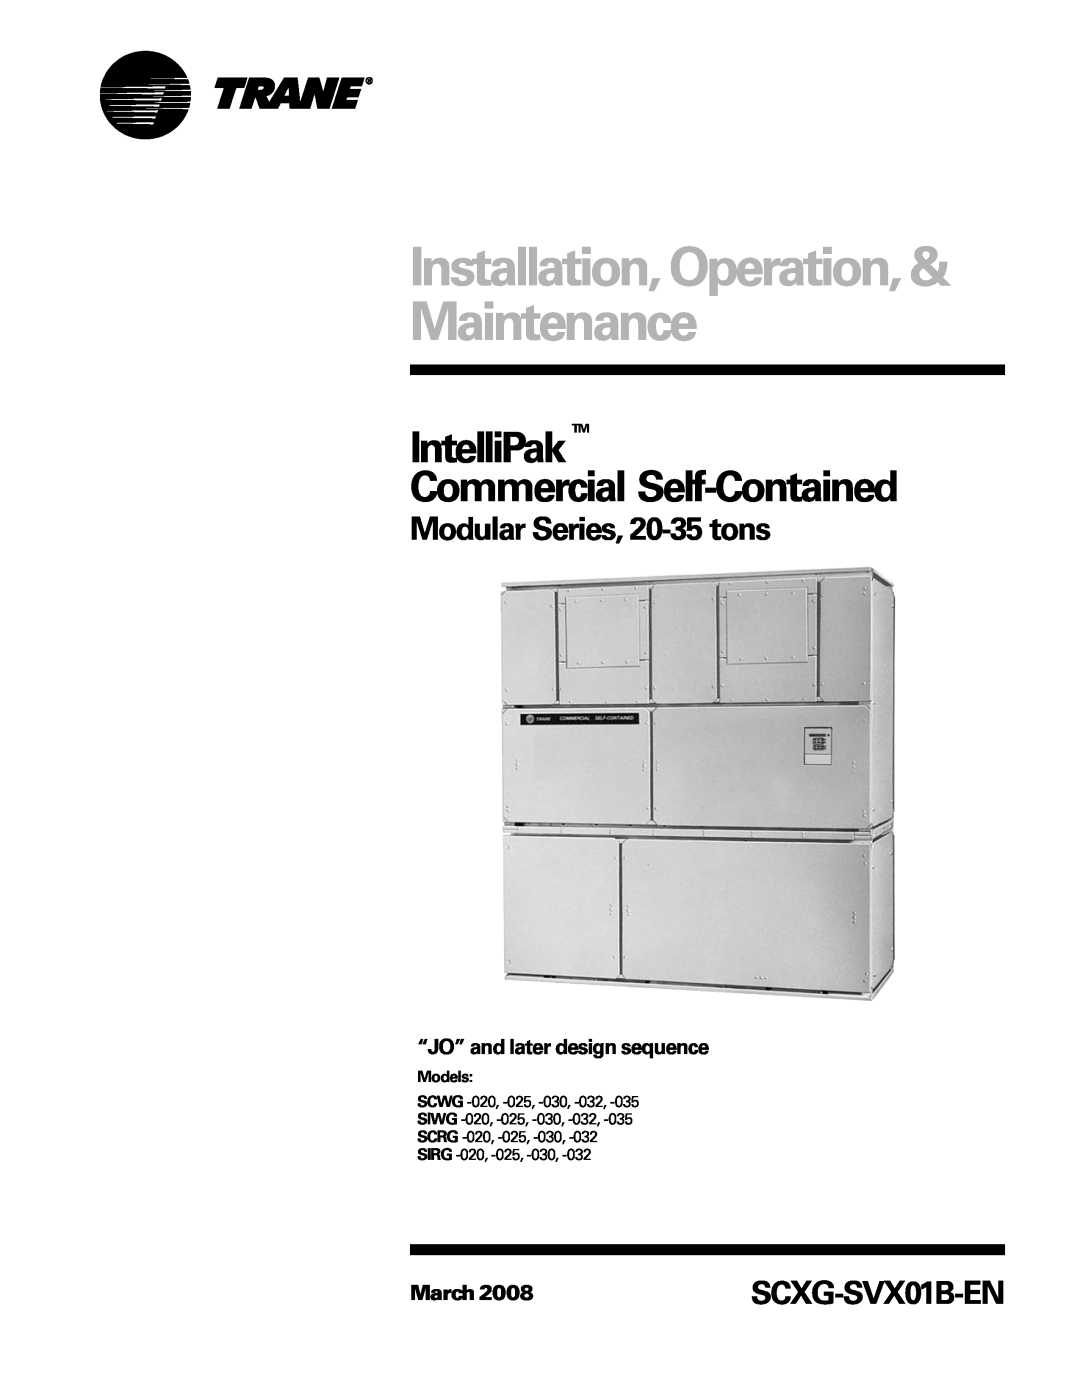 Trane SCXG-SVX01B-EN manual “JO” and later design sequence, Installation, Operation, & Maintenance, Models 